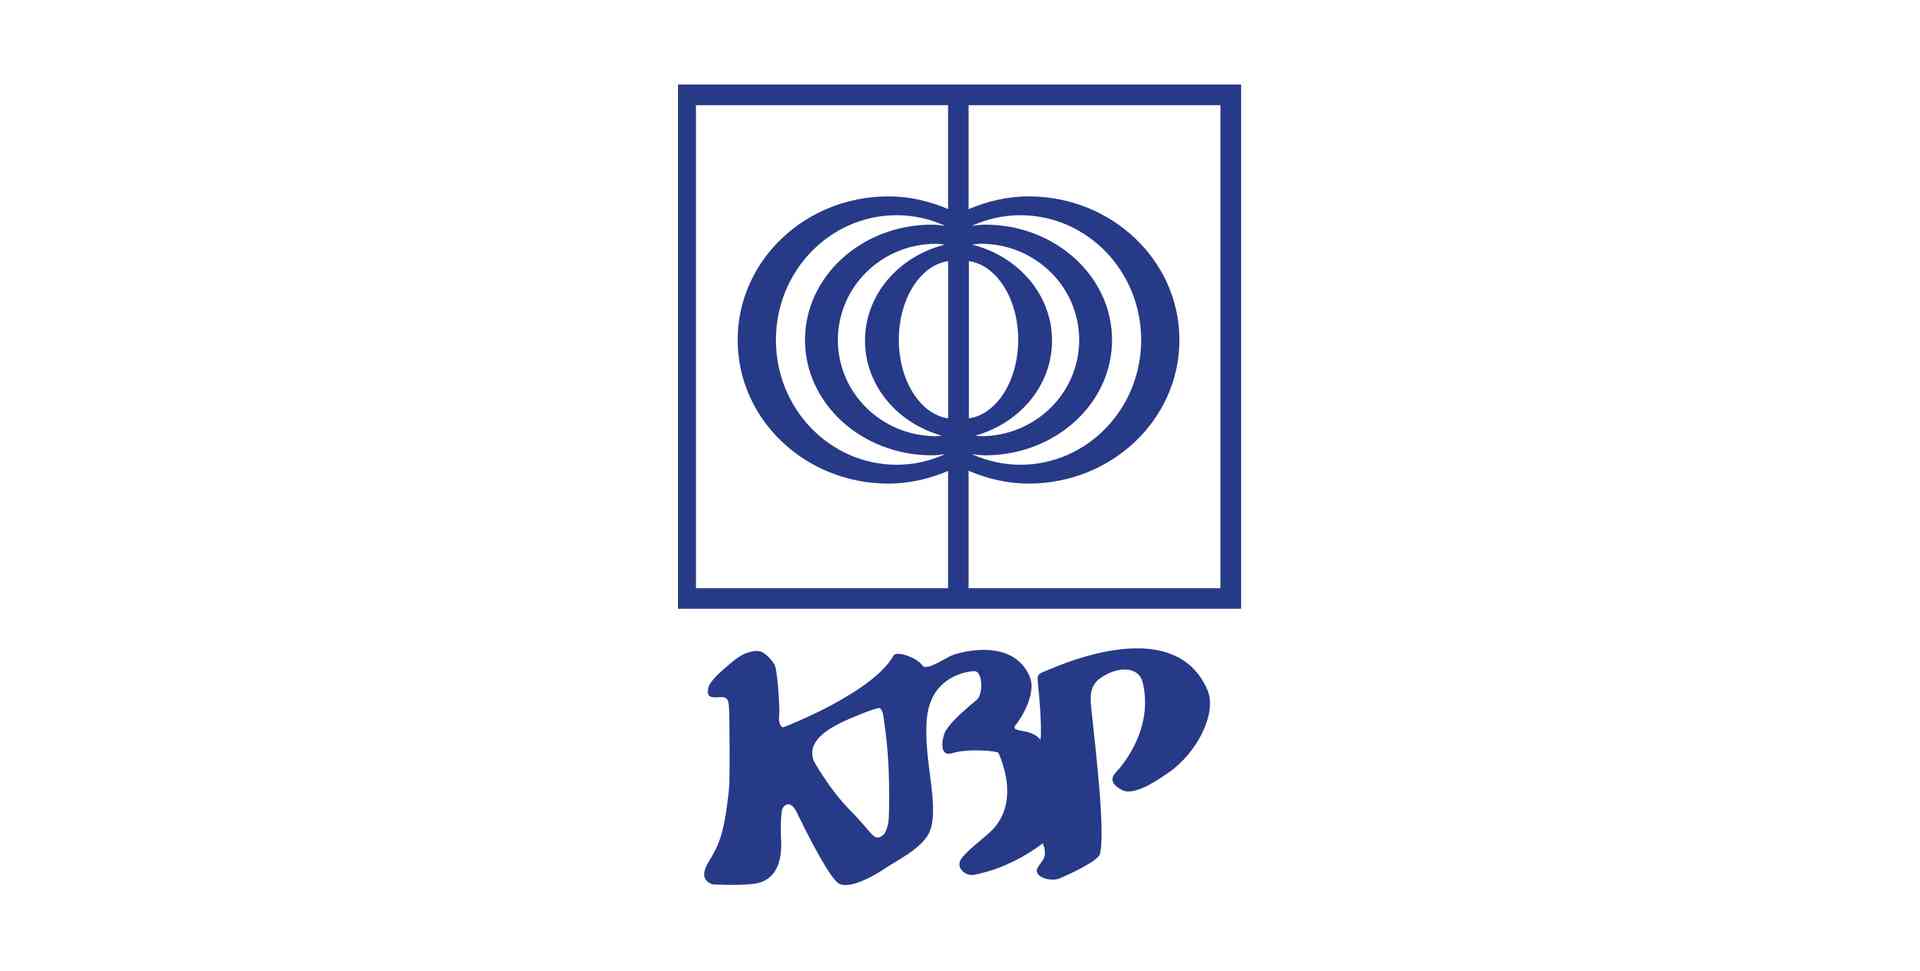 KBP, other news organizations support libel decriminalization